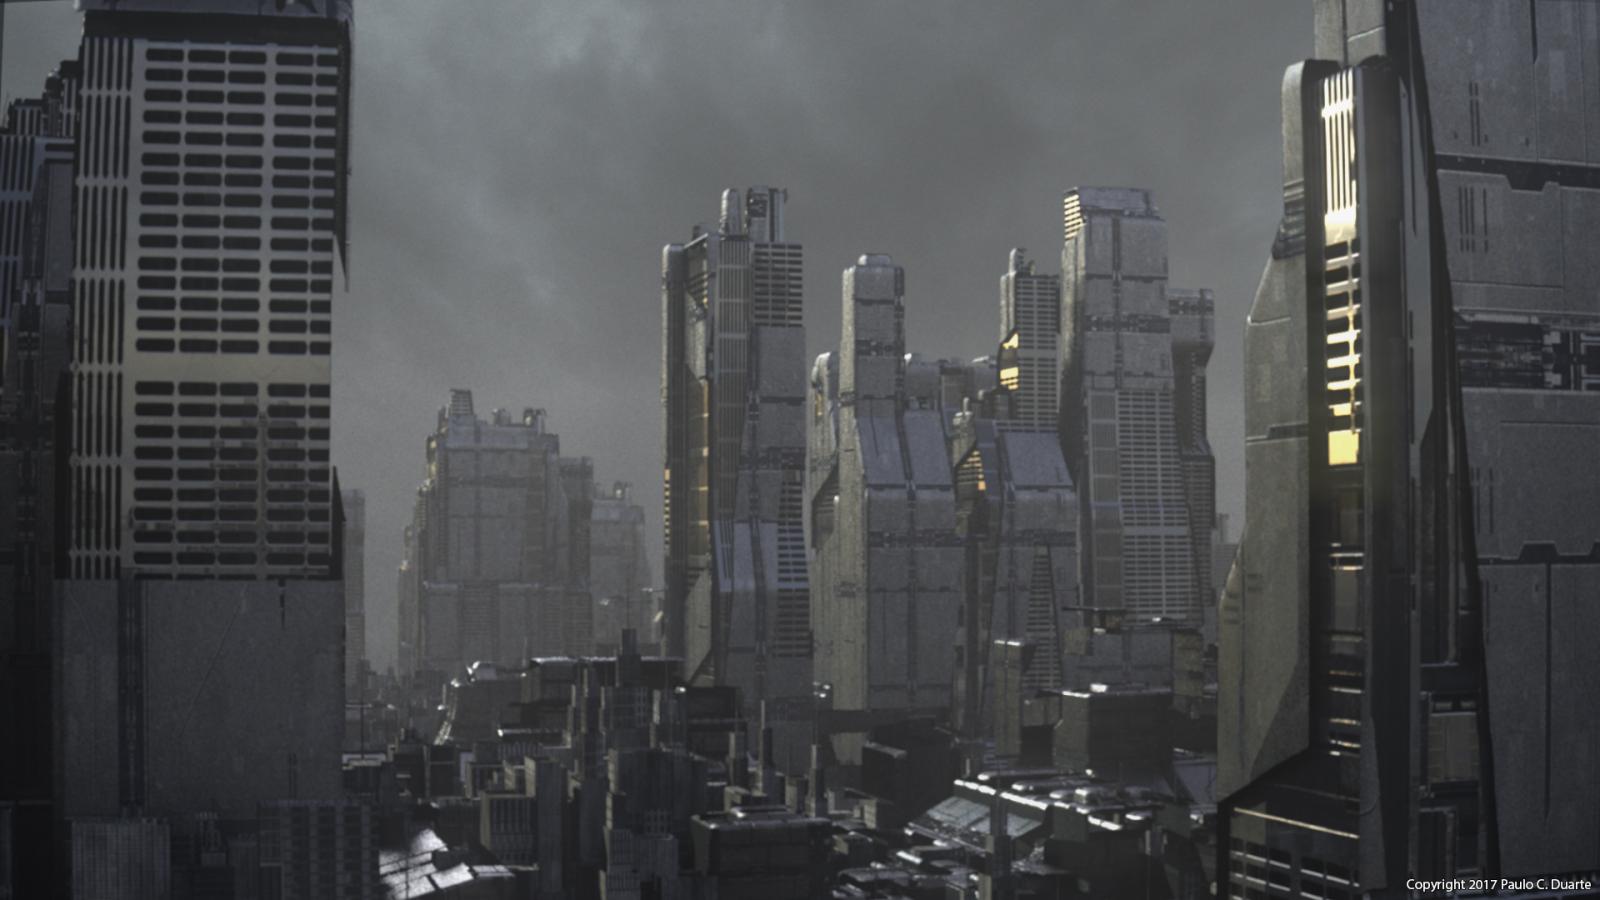 sci-fi-city-concept-005.jpg